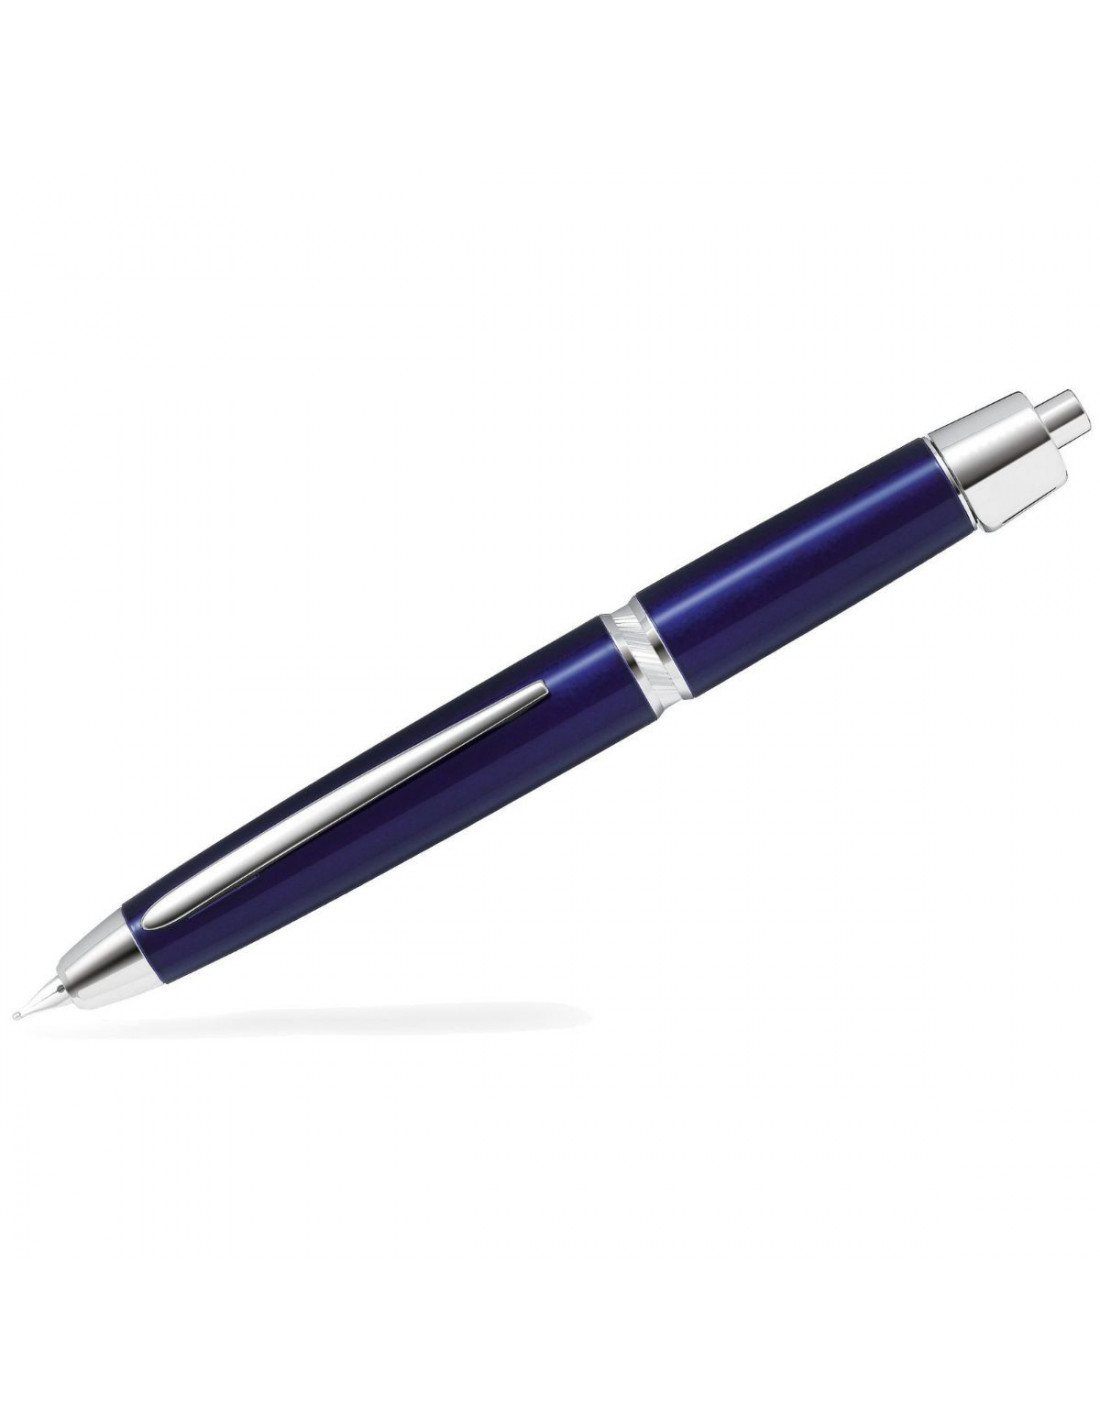 Pilot CAPLESS LS - Vanishing Point - Rhodium - Blue - Fountain pen